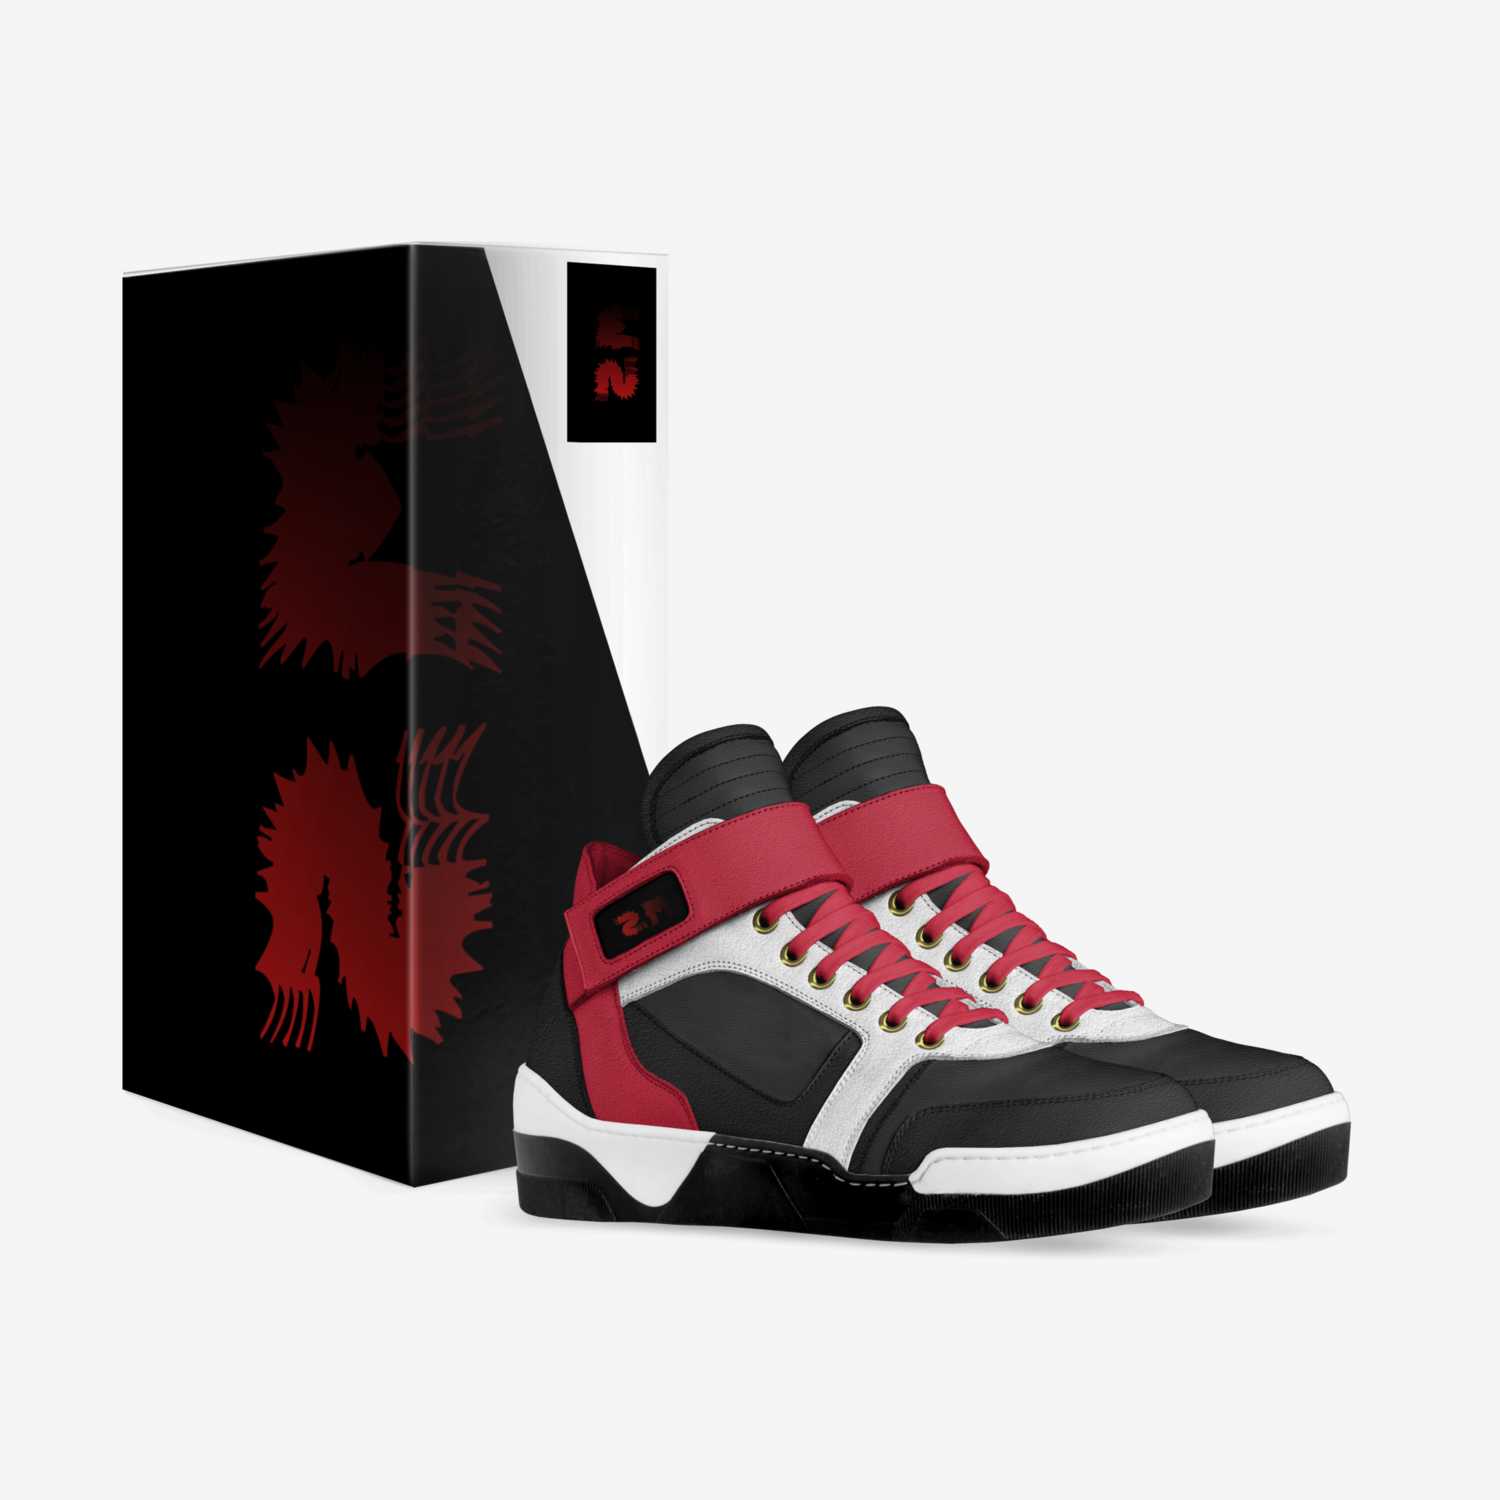 JFK12'S custom made in Italy shoes by Zoran Mcnally | Box view